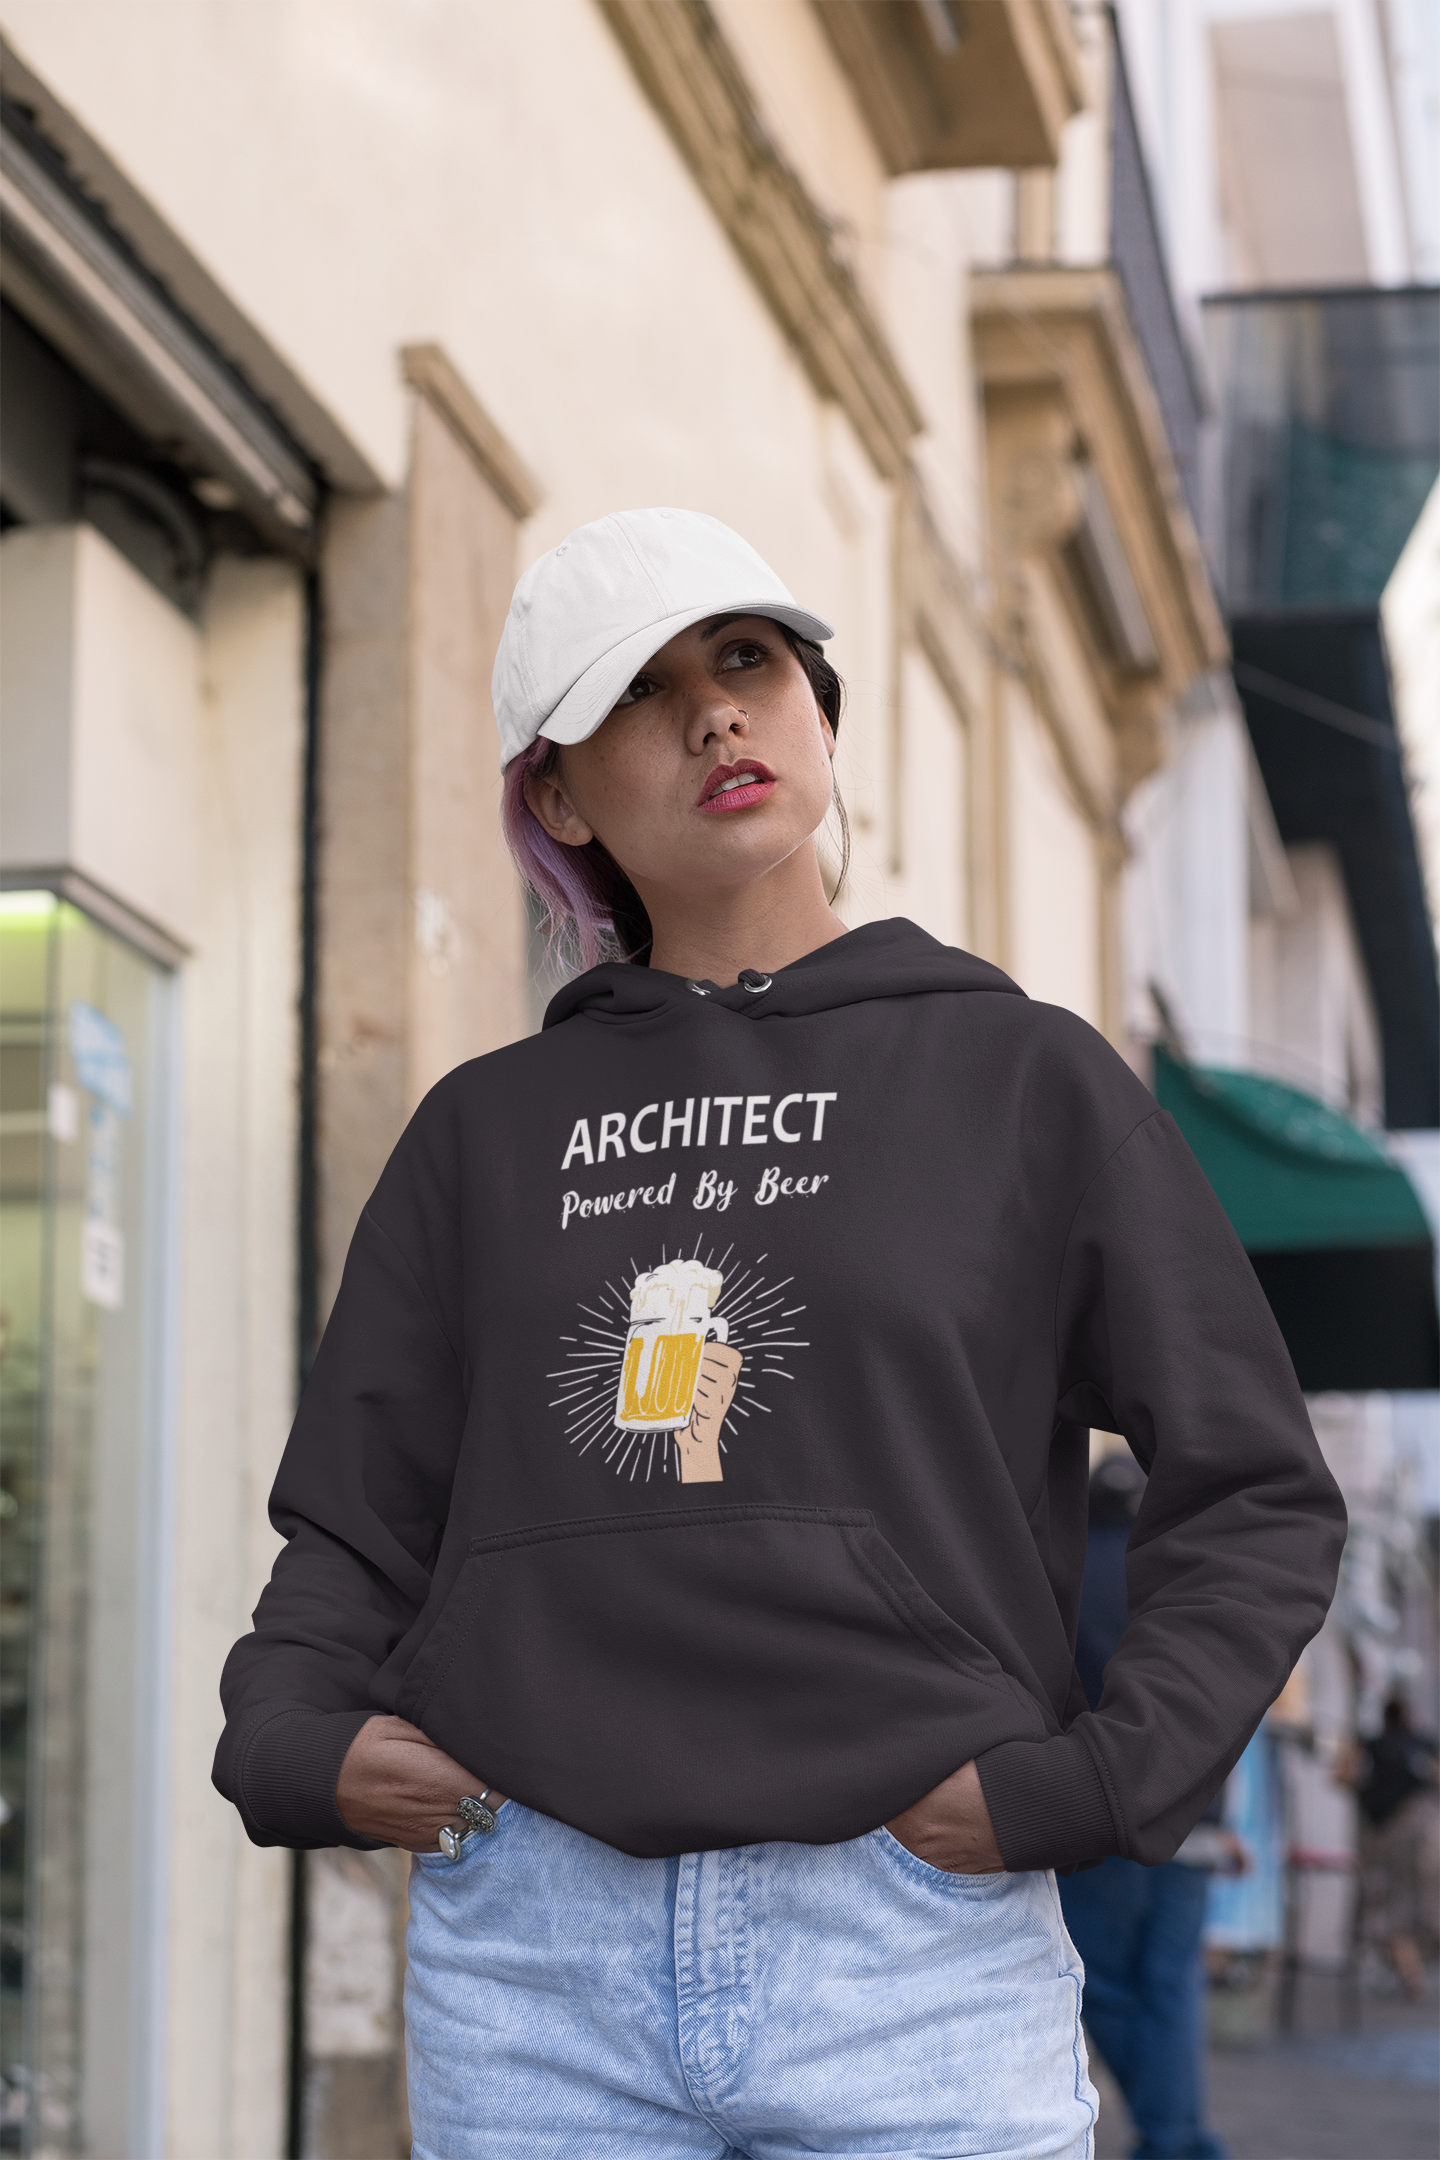 Beer Architect Profession Hoodies for Women-FunkyTeesClub